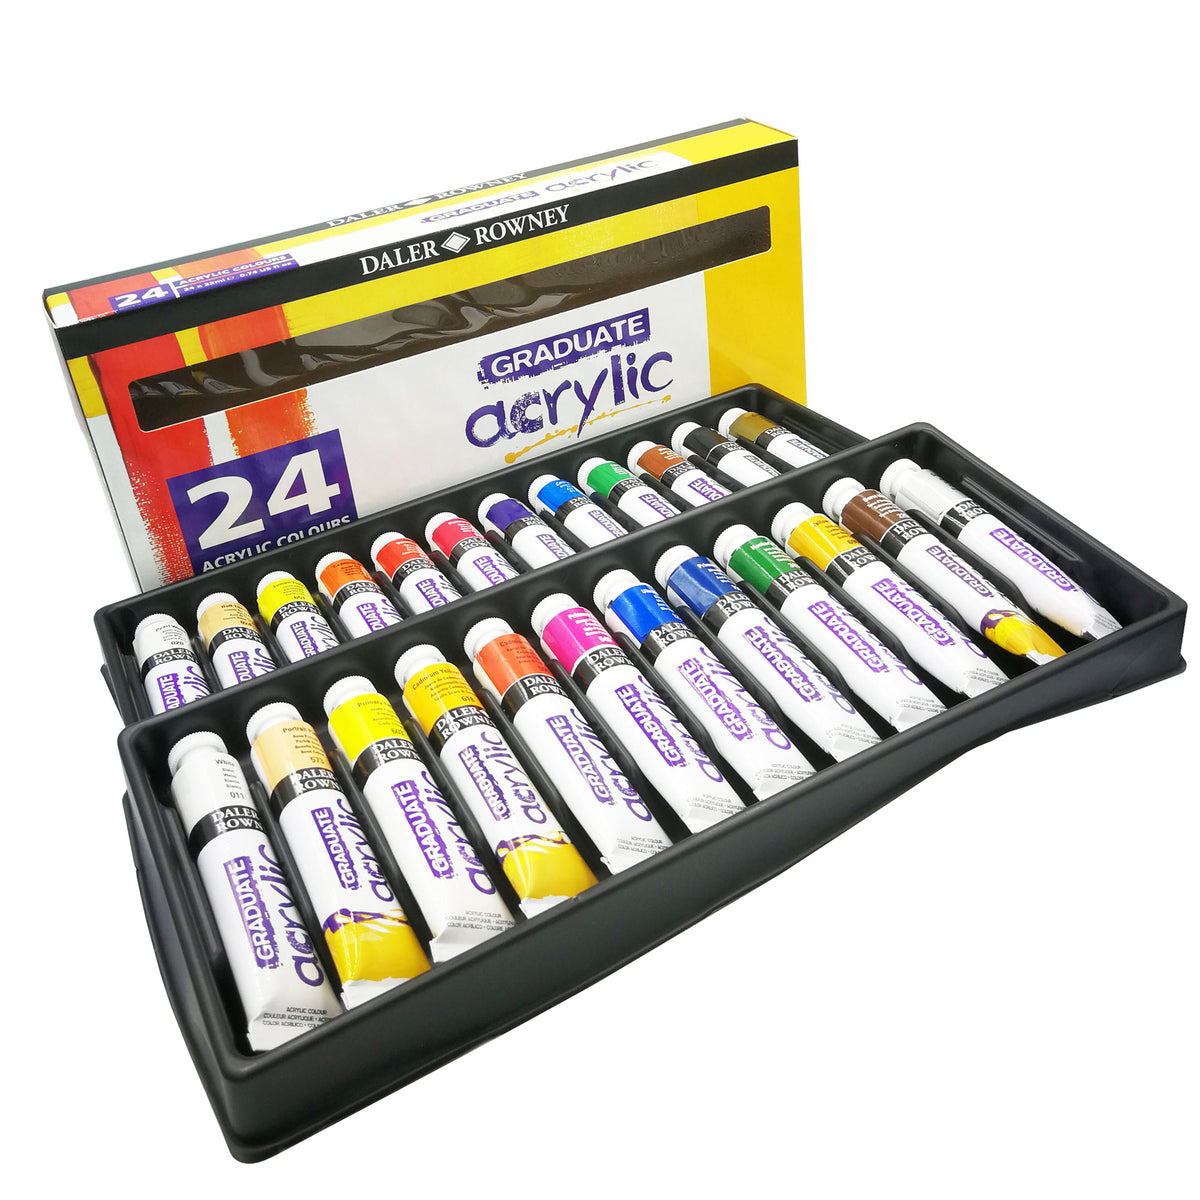 Daler-Rowney Graduate Acrylic Colour Selection Set - 24 x 22ml Tubes